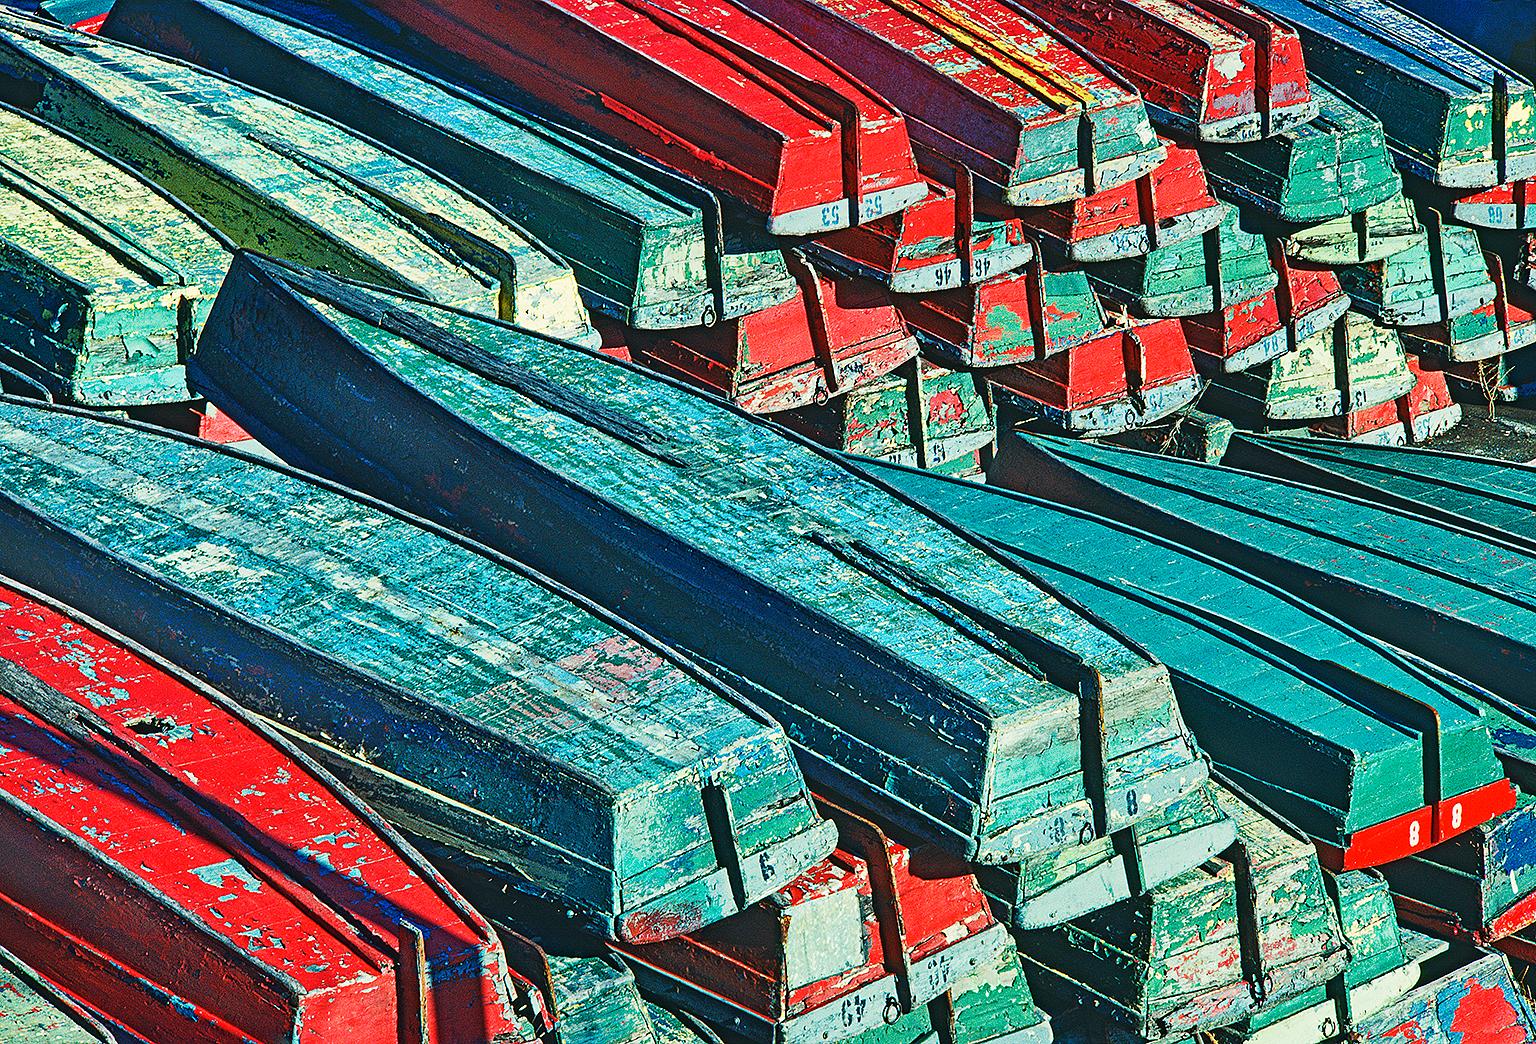 Mitchell Funk Abstract Photograph – Holz- Ruderboote: Grün, Blau und Rot, Central Park, New York City